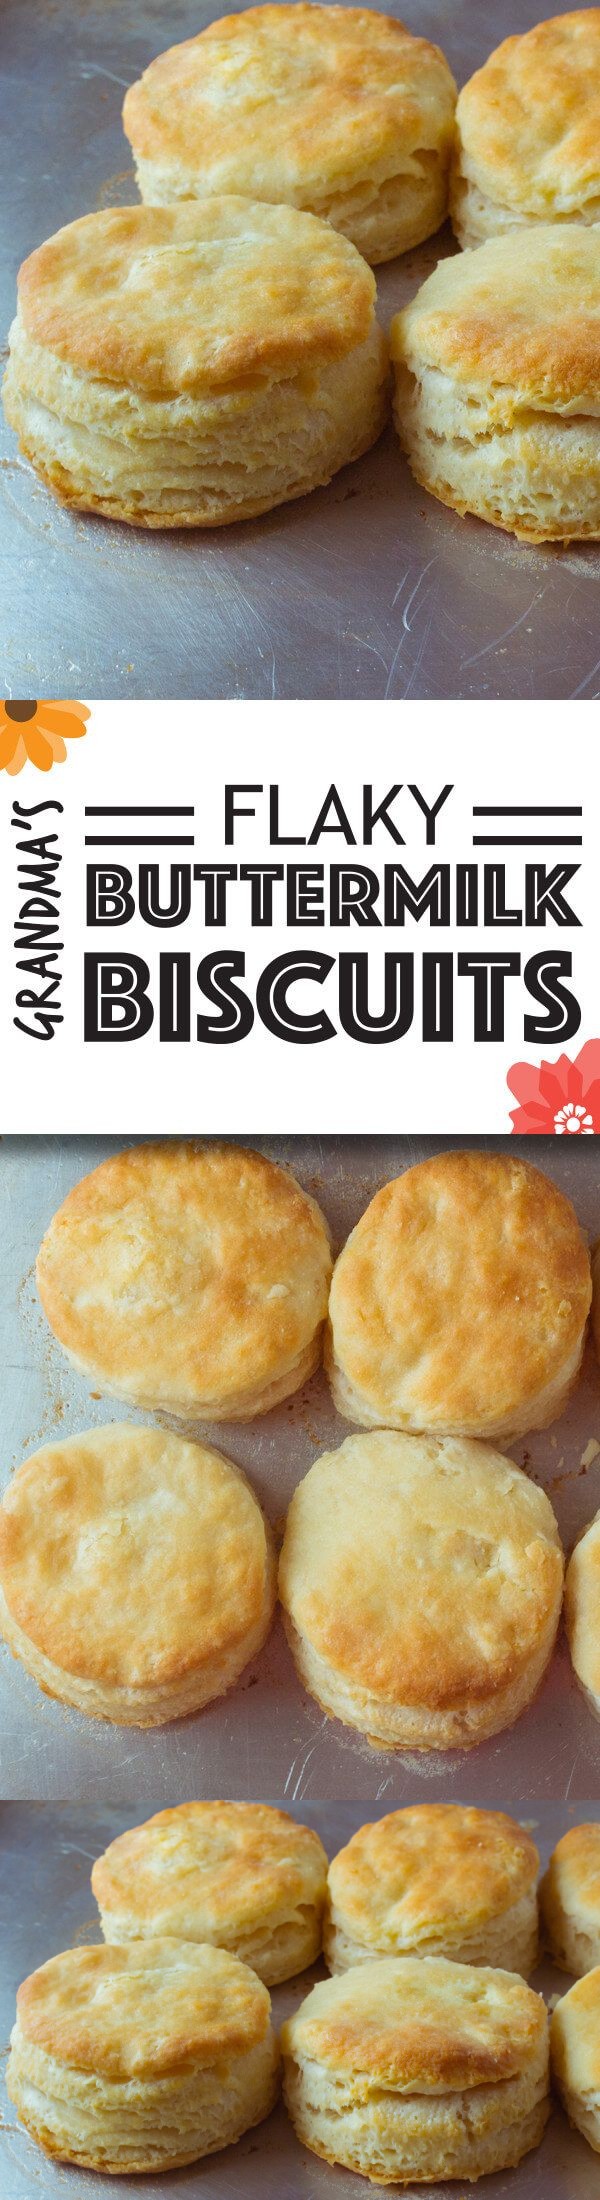 Grandma's Flaky Buttermilk Biscuits